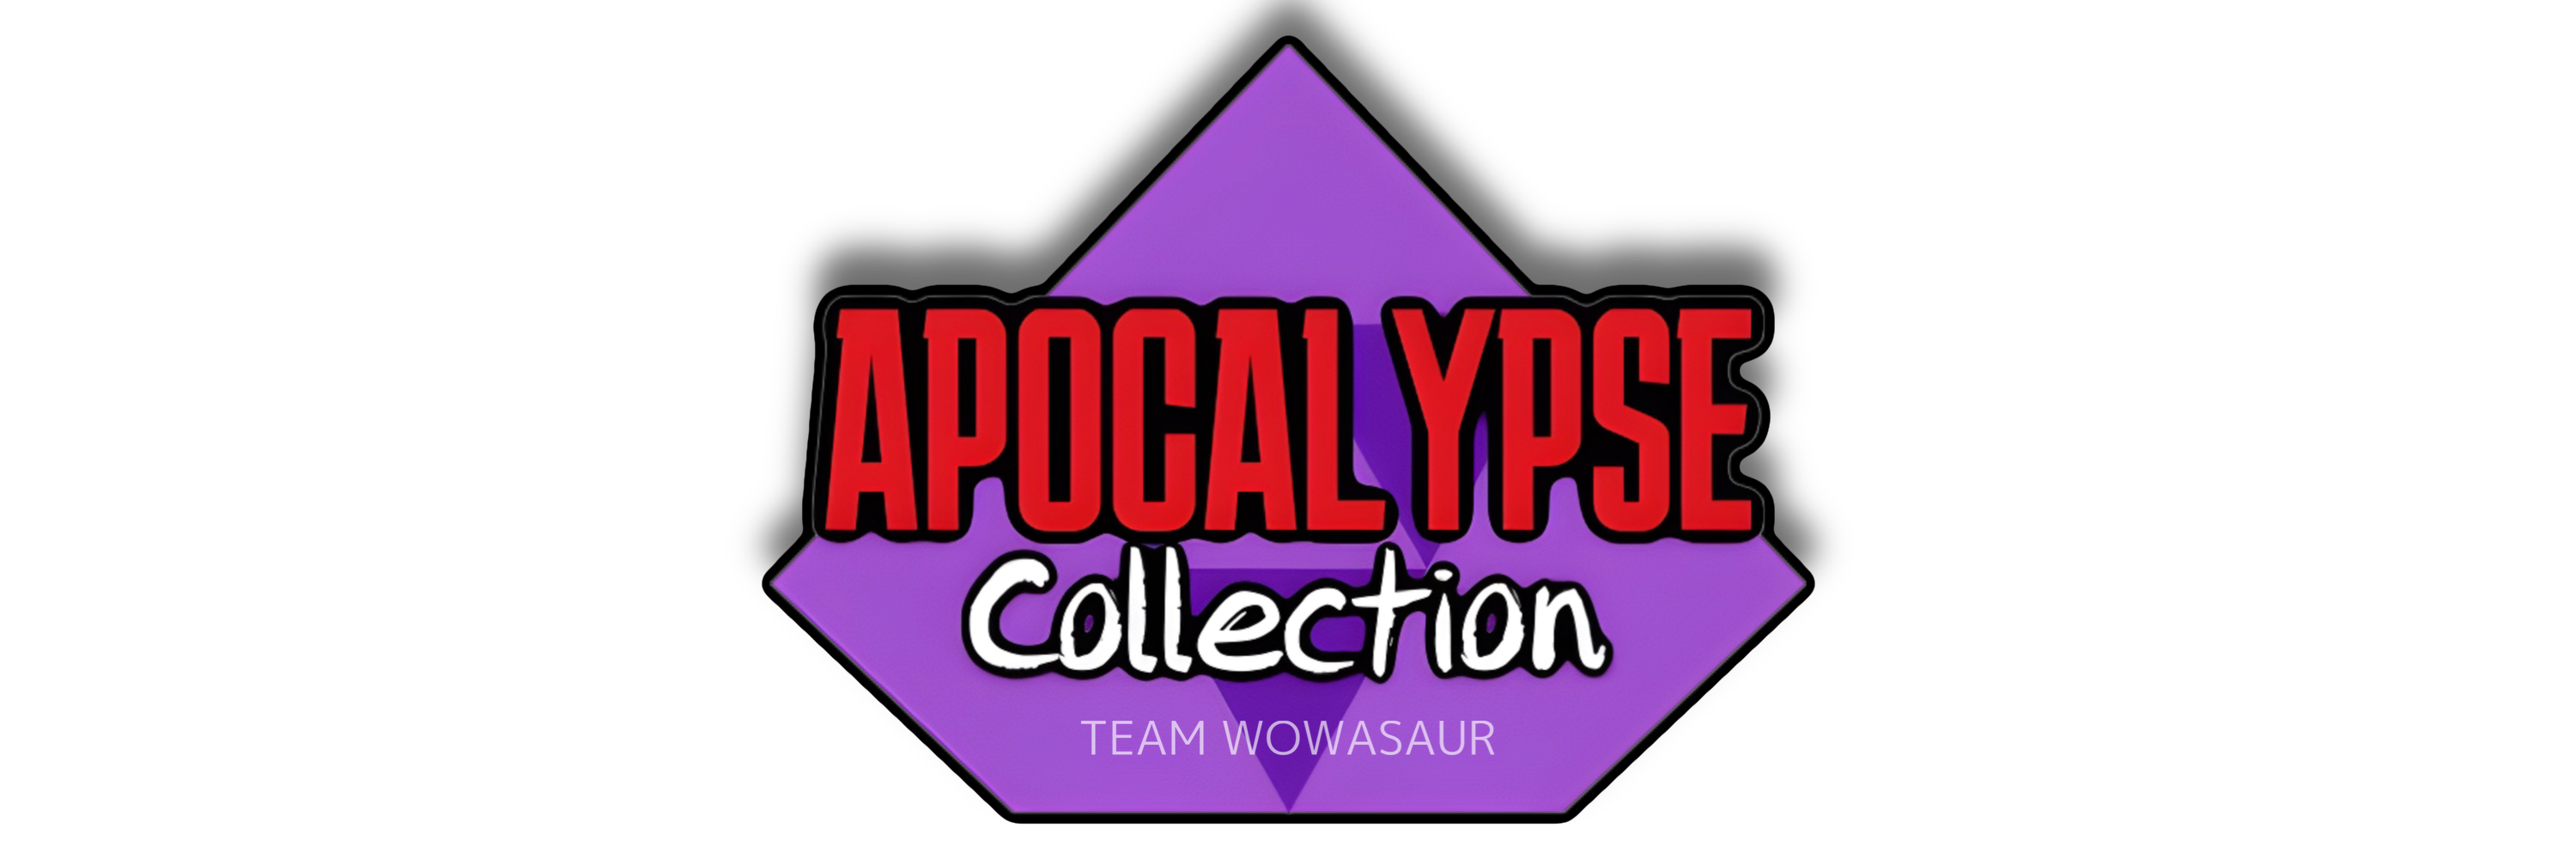 Apocalypse Collection